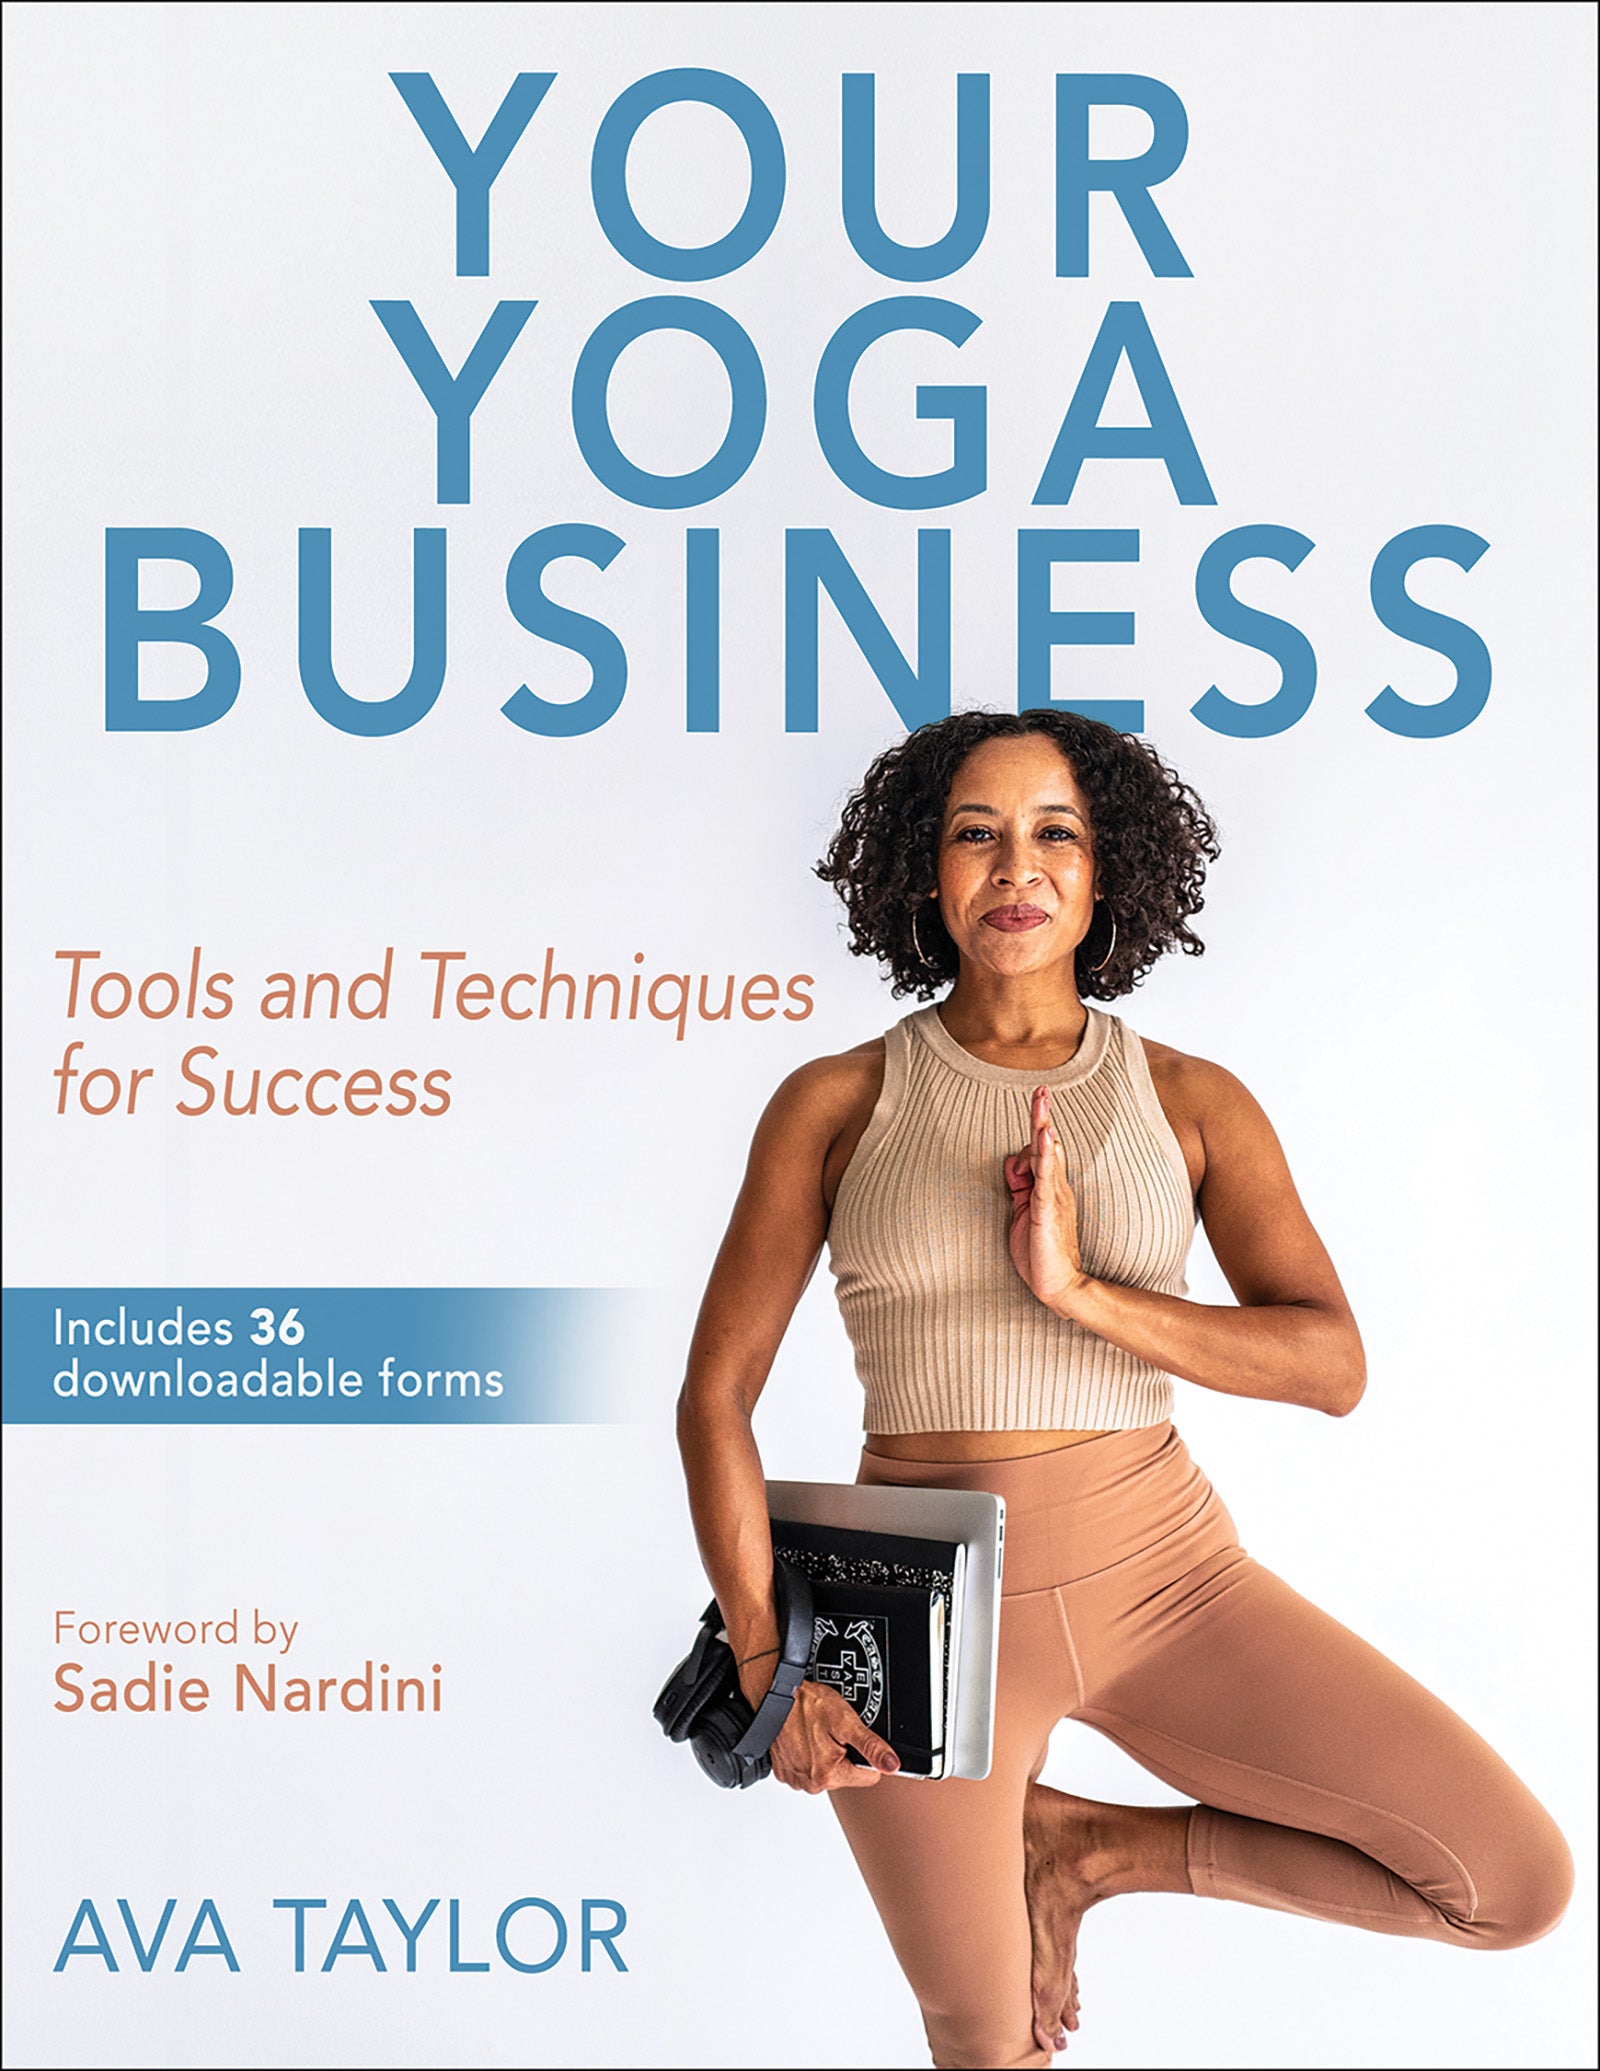 Mastering Entrepreneurship with Your Yoga Business 10 Week Led Series